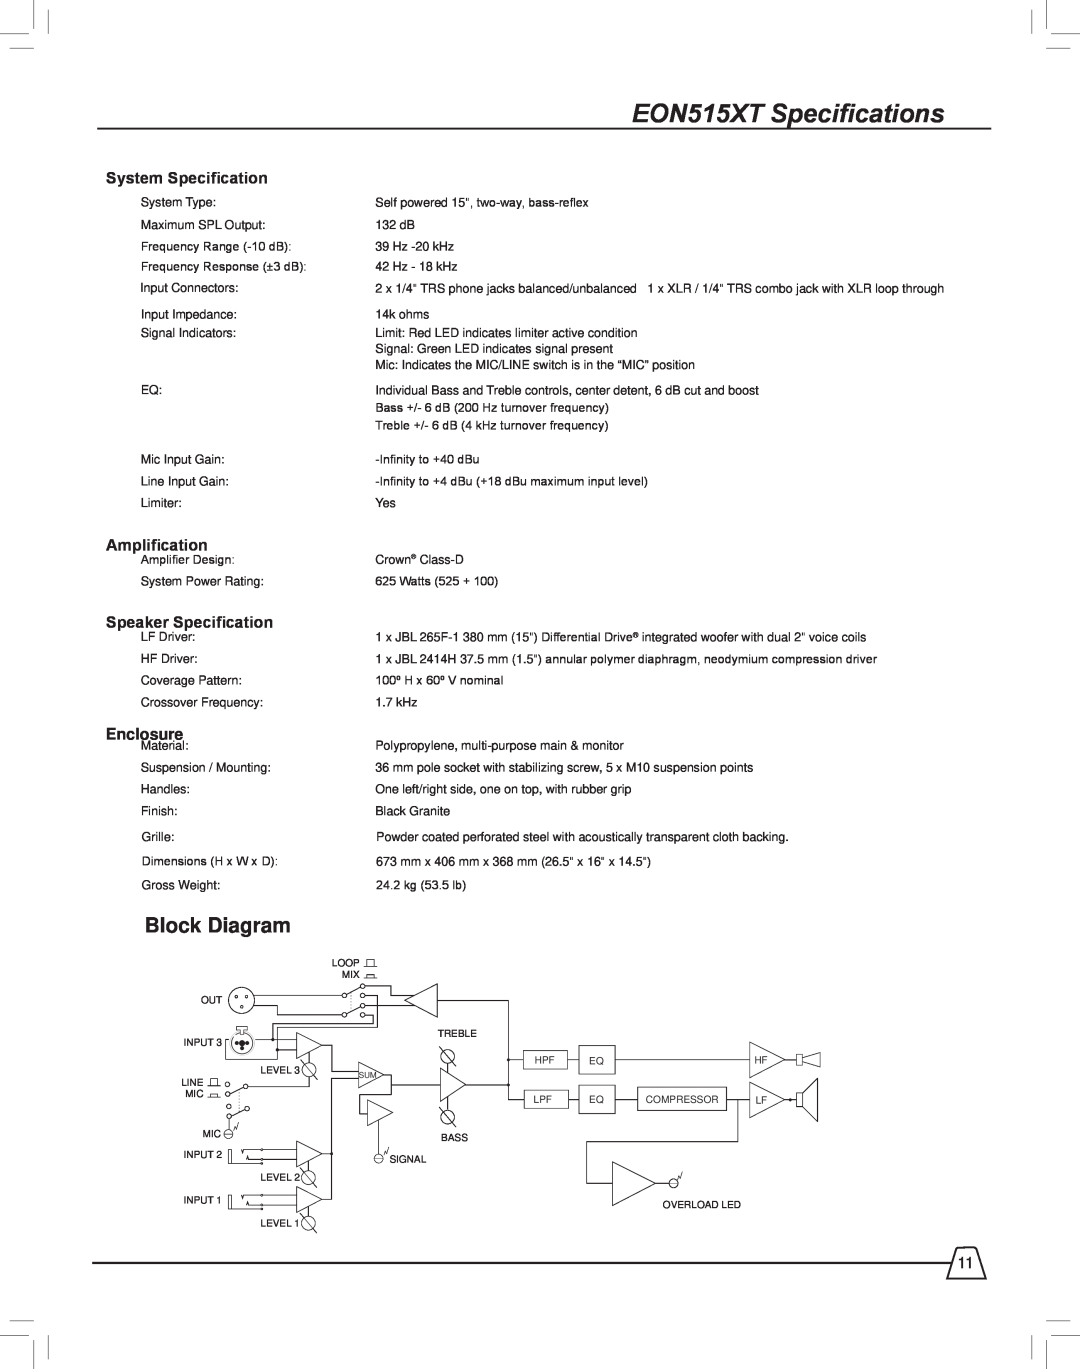 JBL manual EON515XT Specifications, Block Diagram 